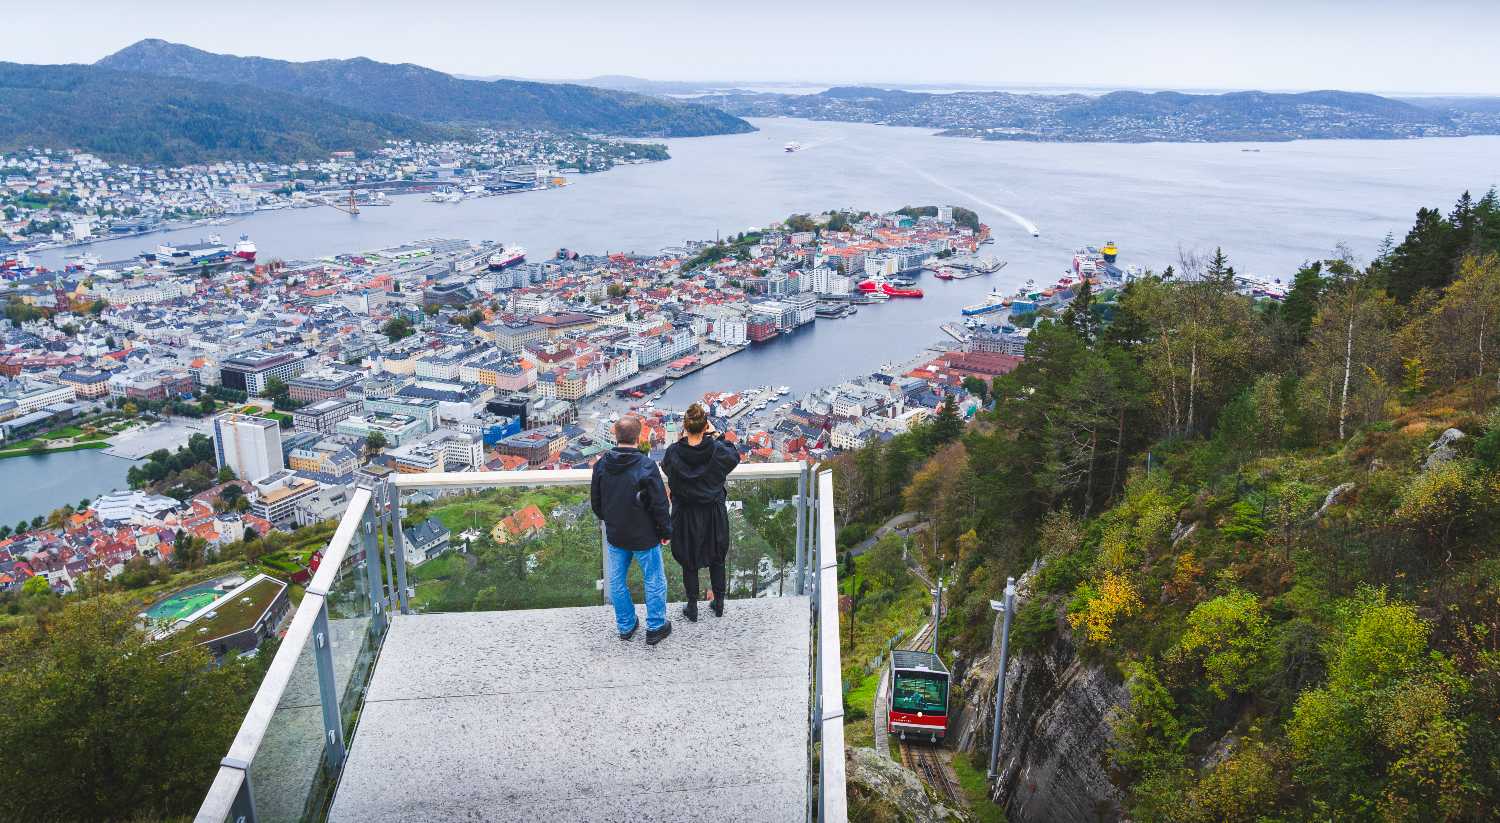 Things to do in Bergen - hiking at Fløyen